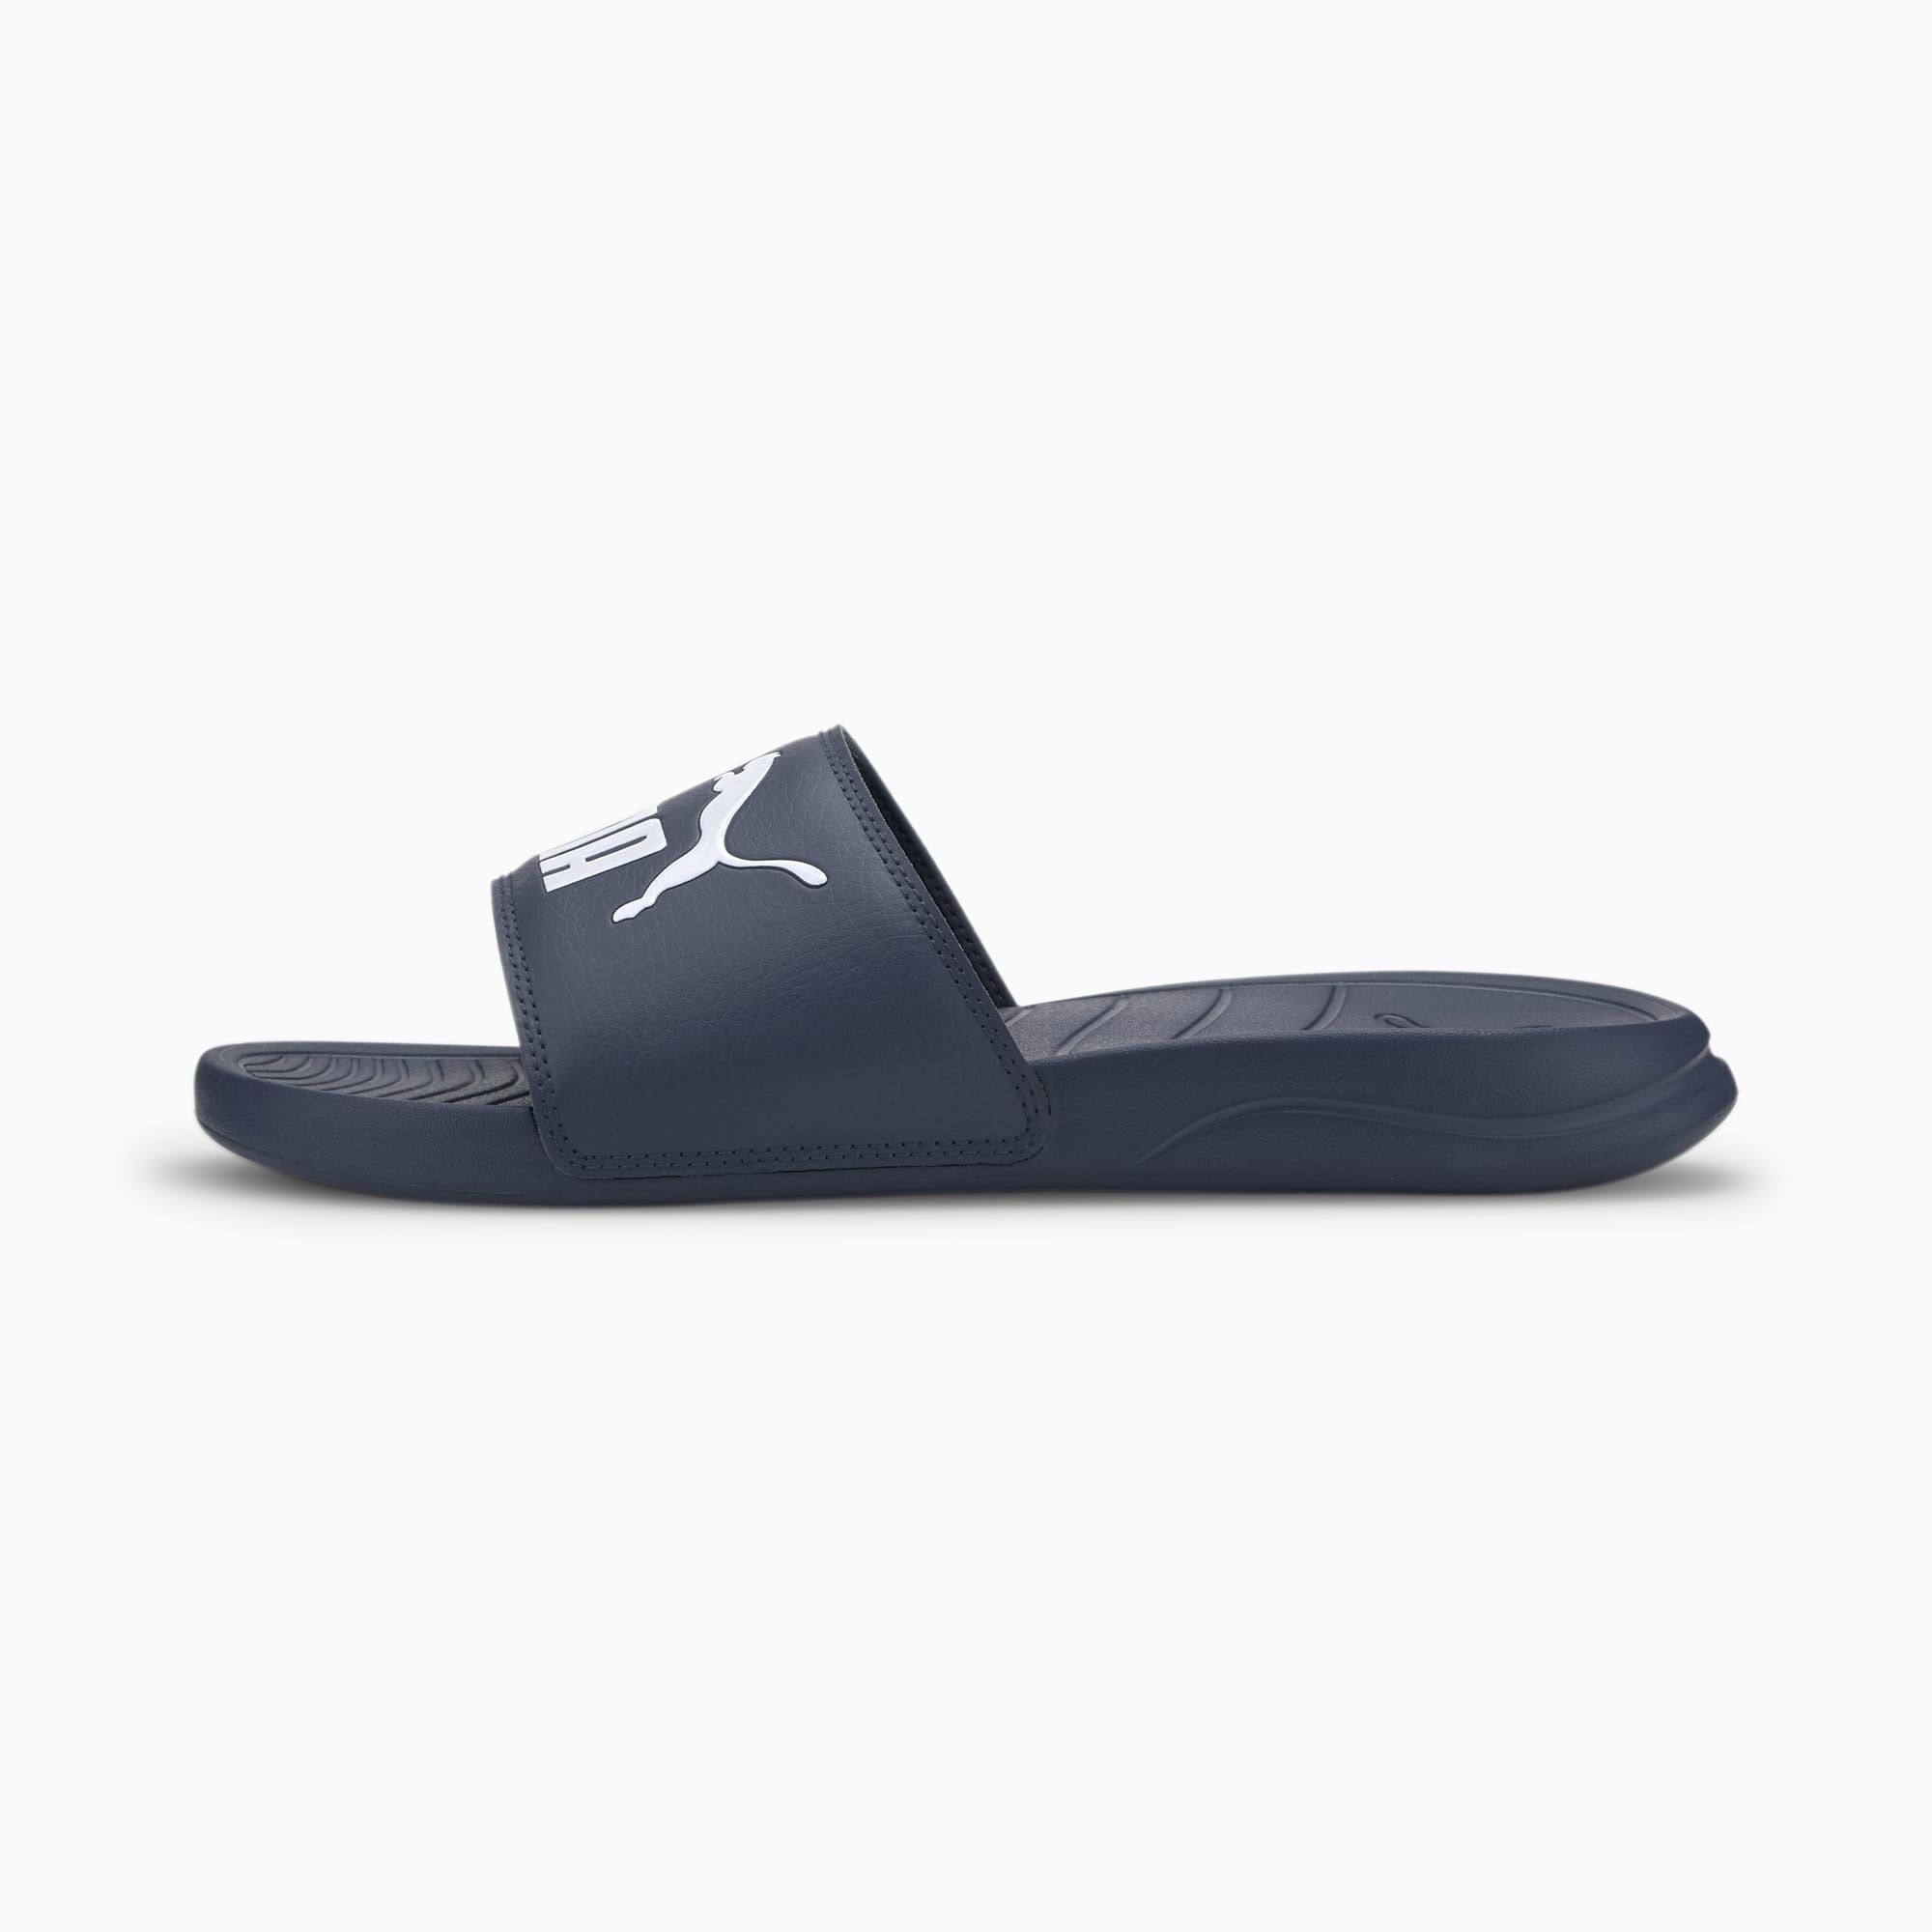 puma men's popcat slide sandal